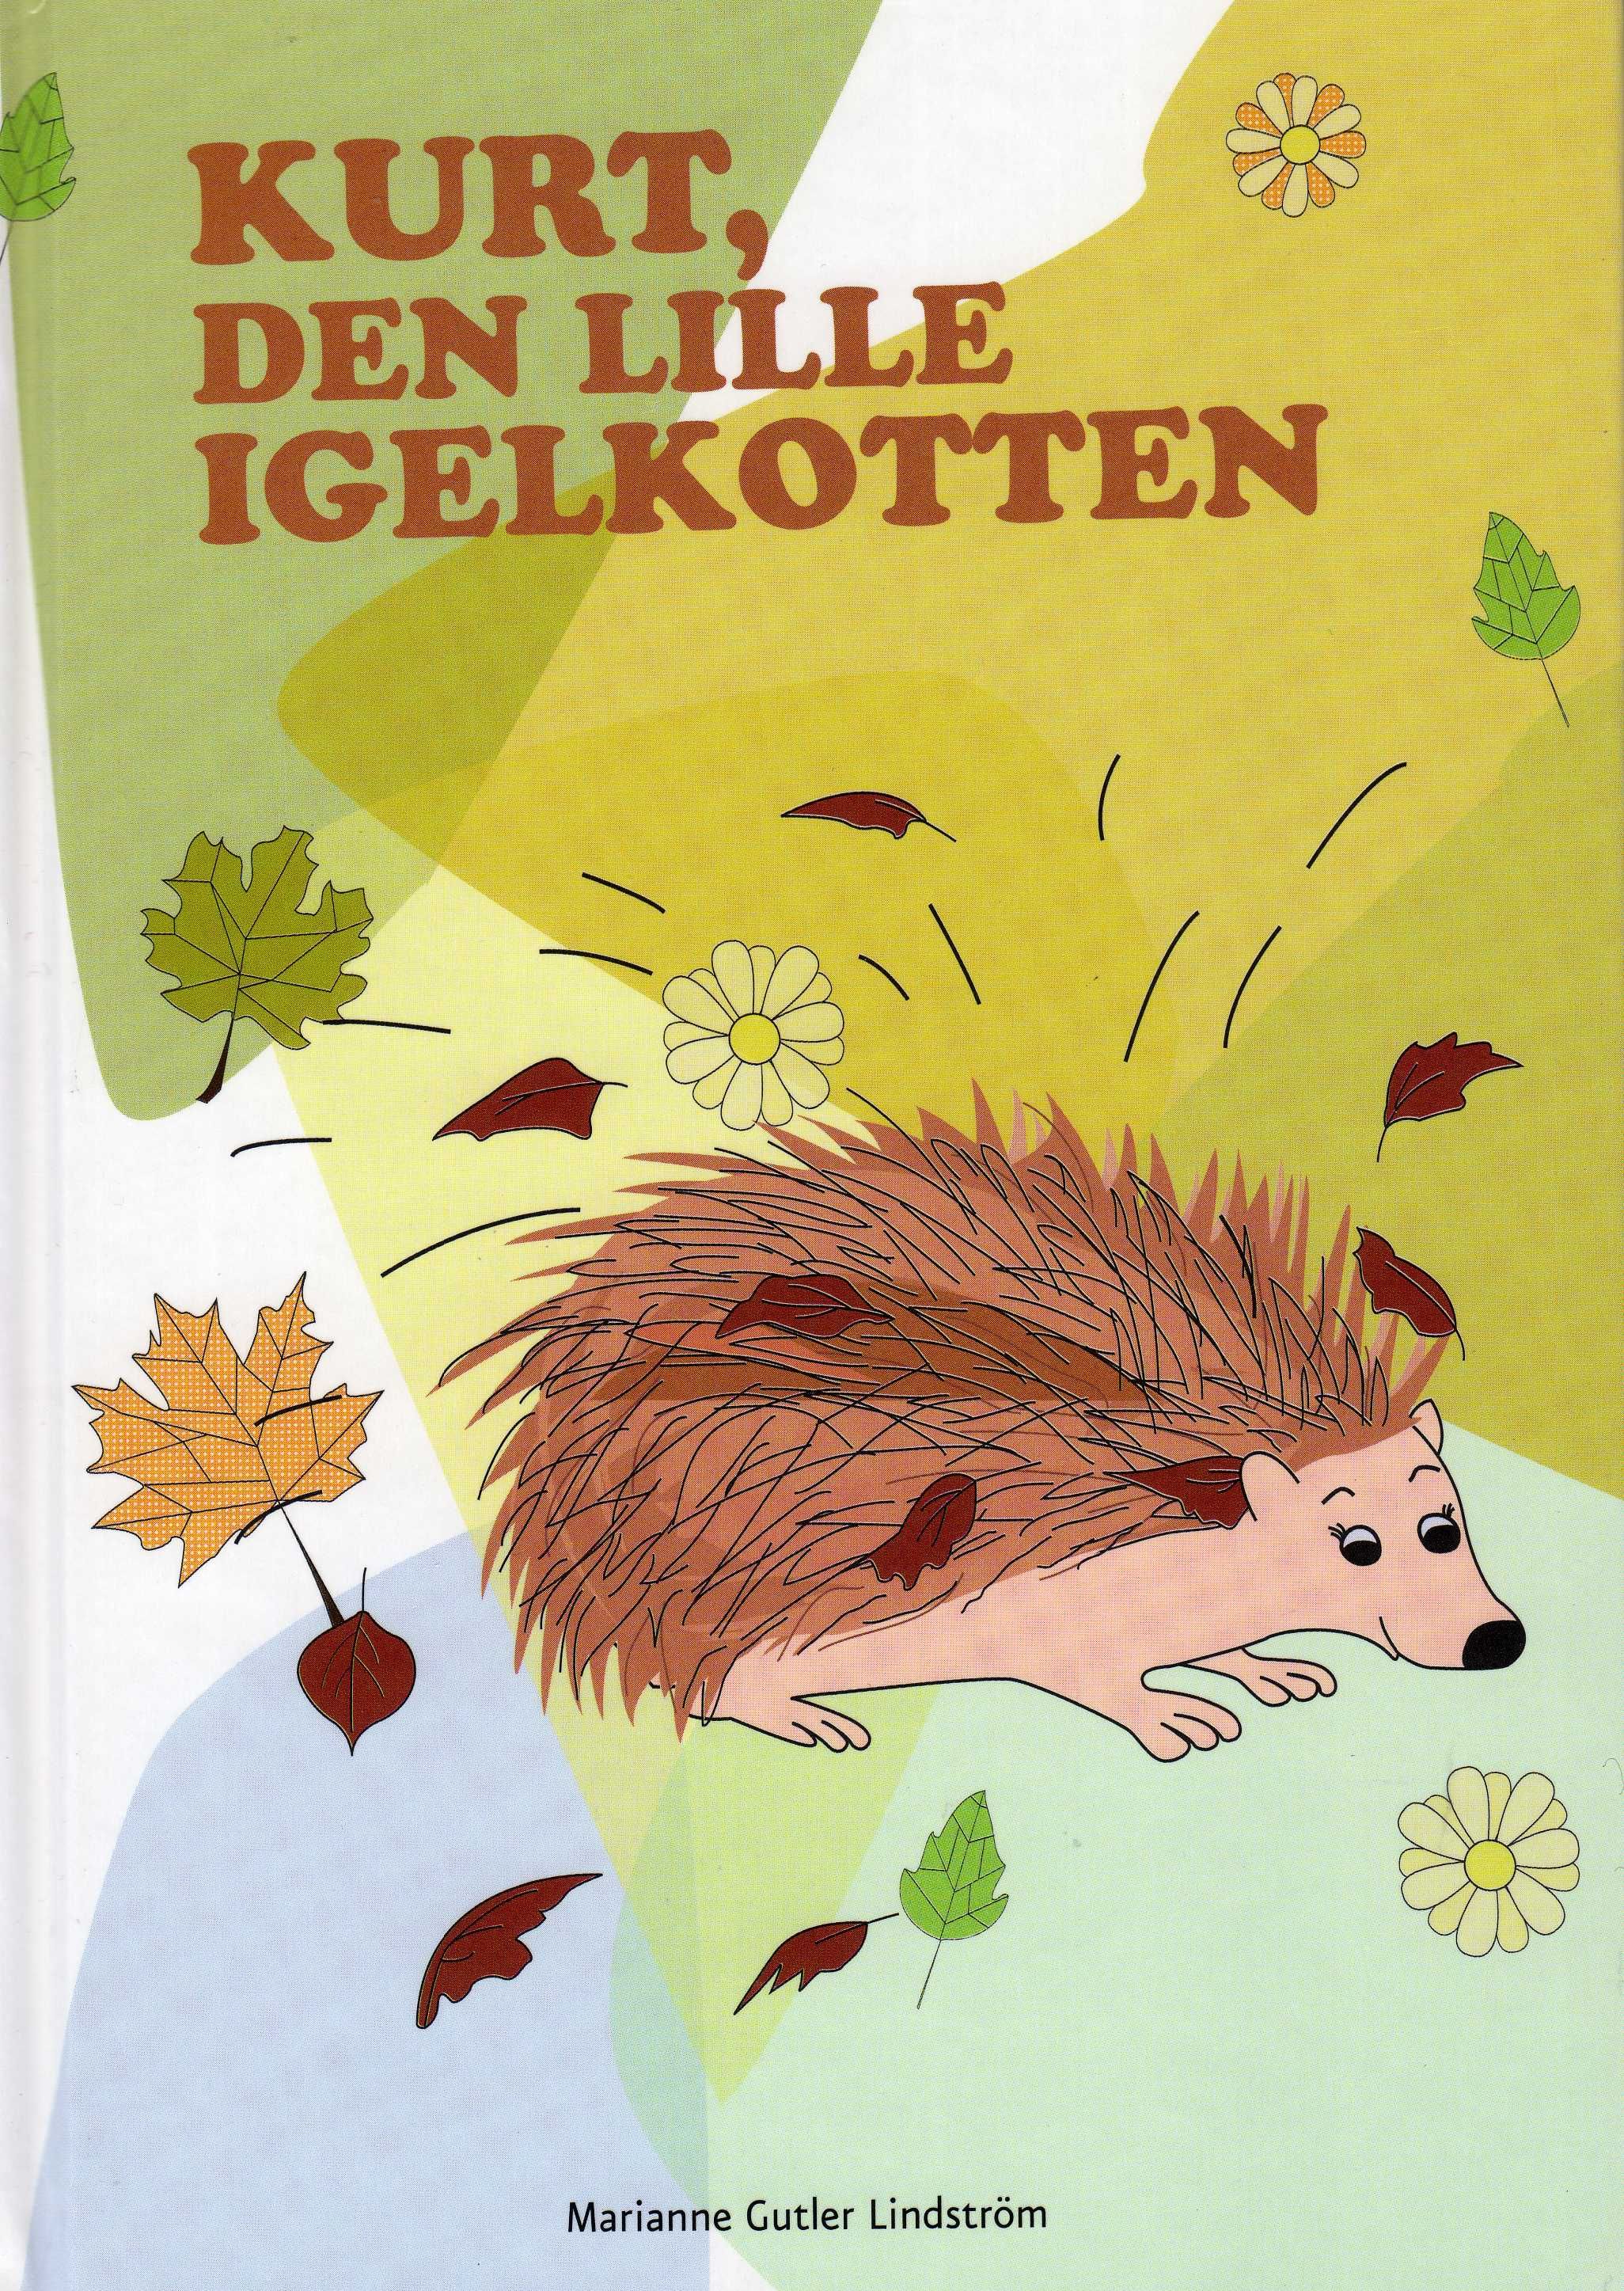 Kurt, den lille igelkotten, eBook by Marianne Gutler Lindström